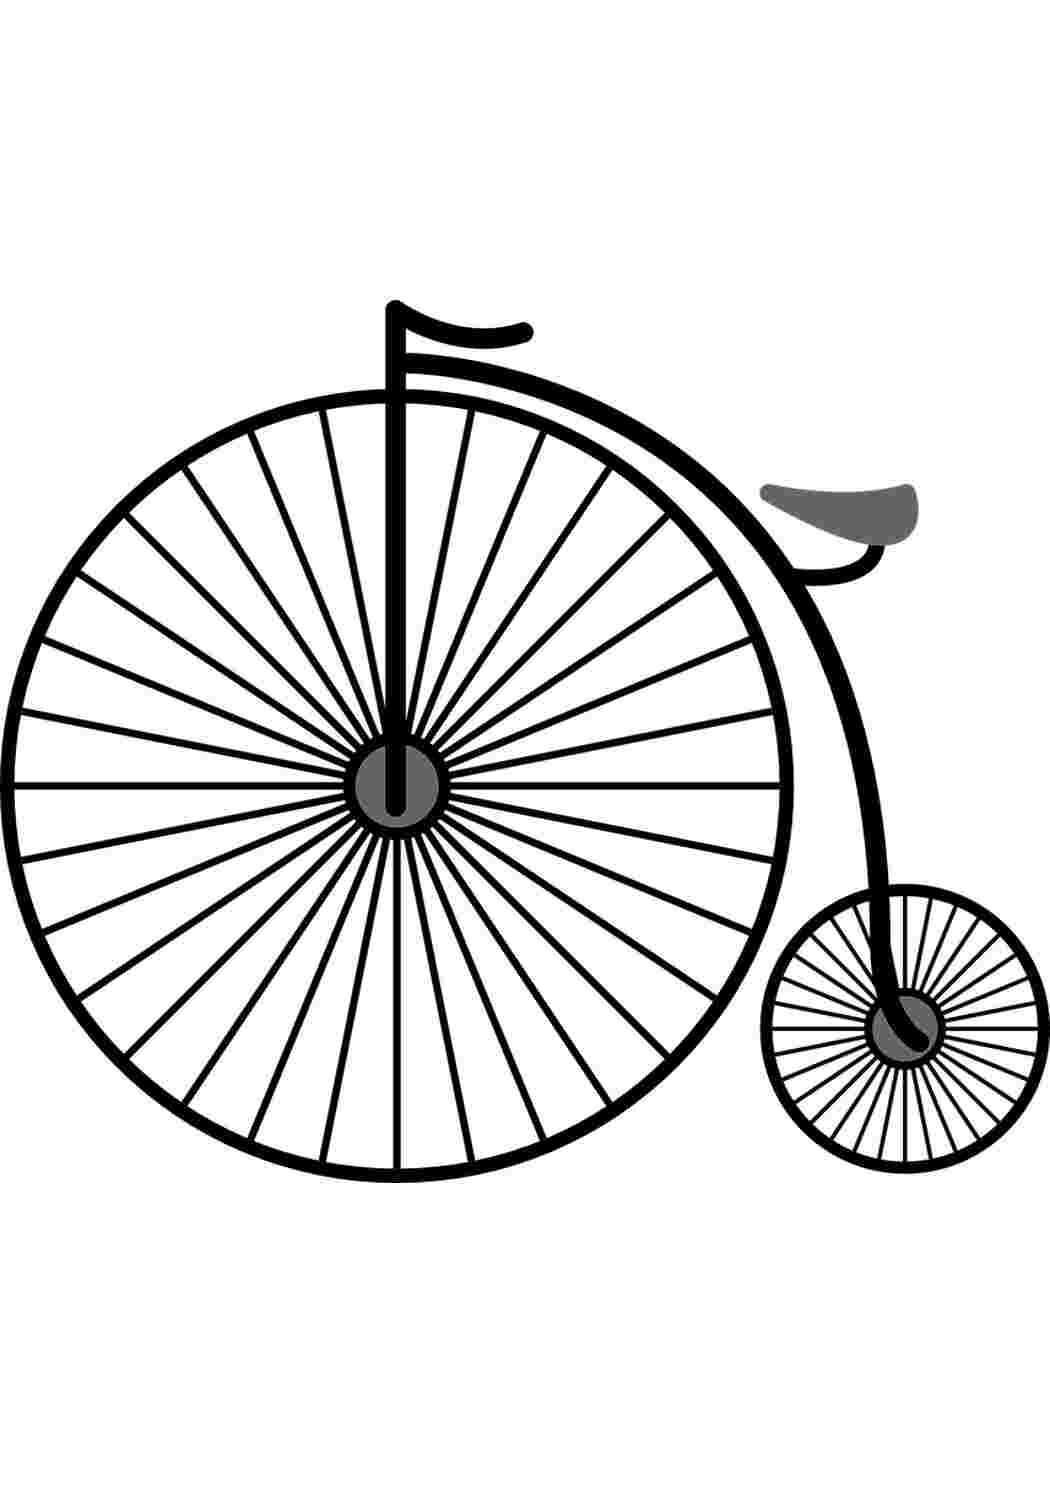 Велосипедное колесо на прозрачном фоне